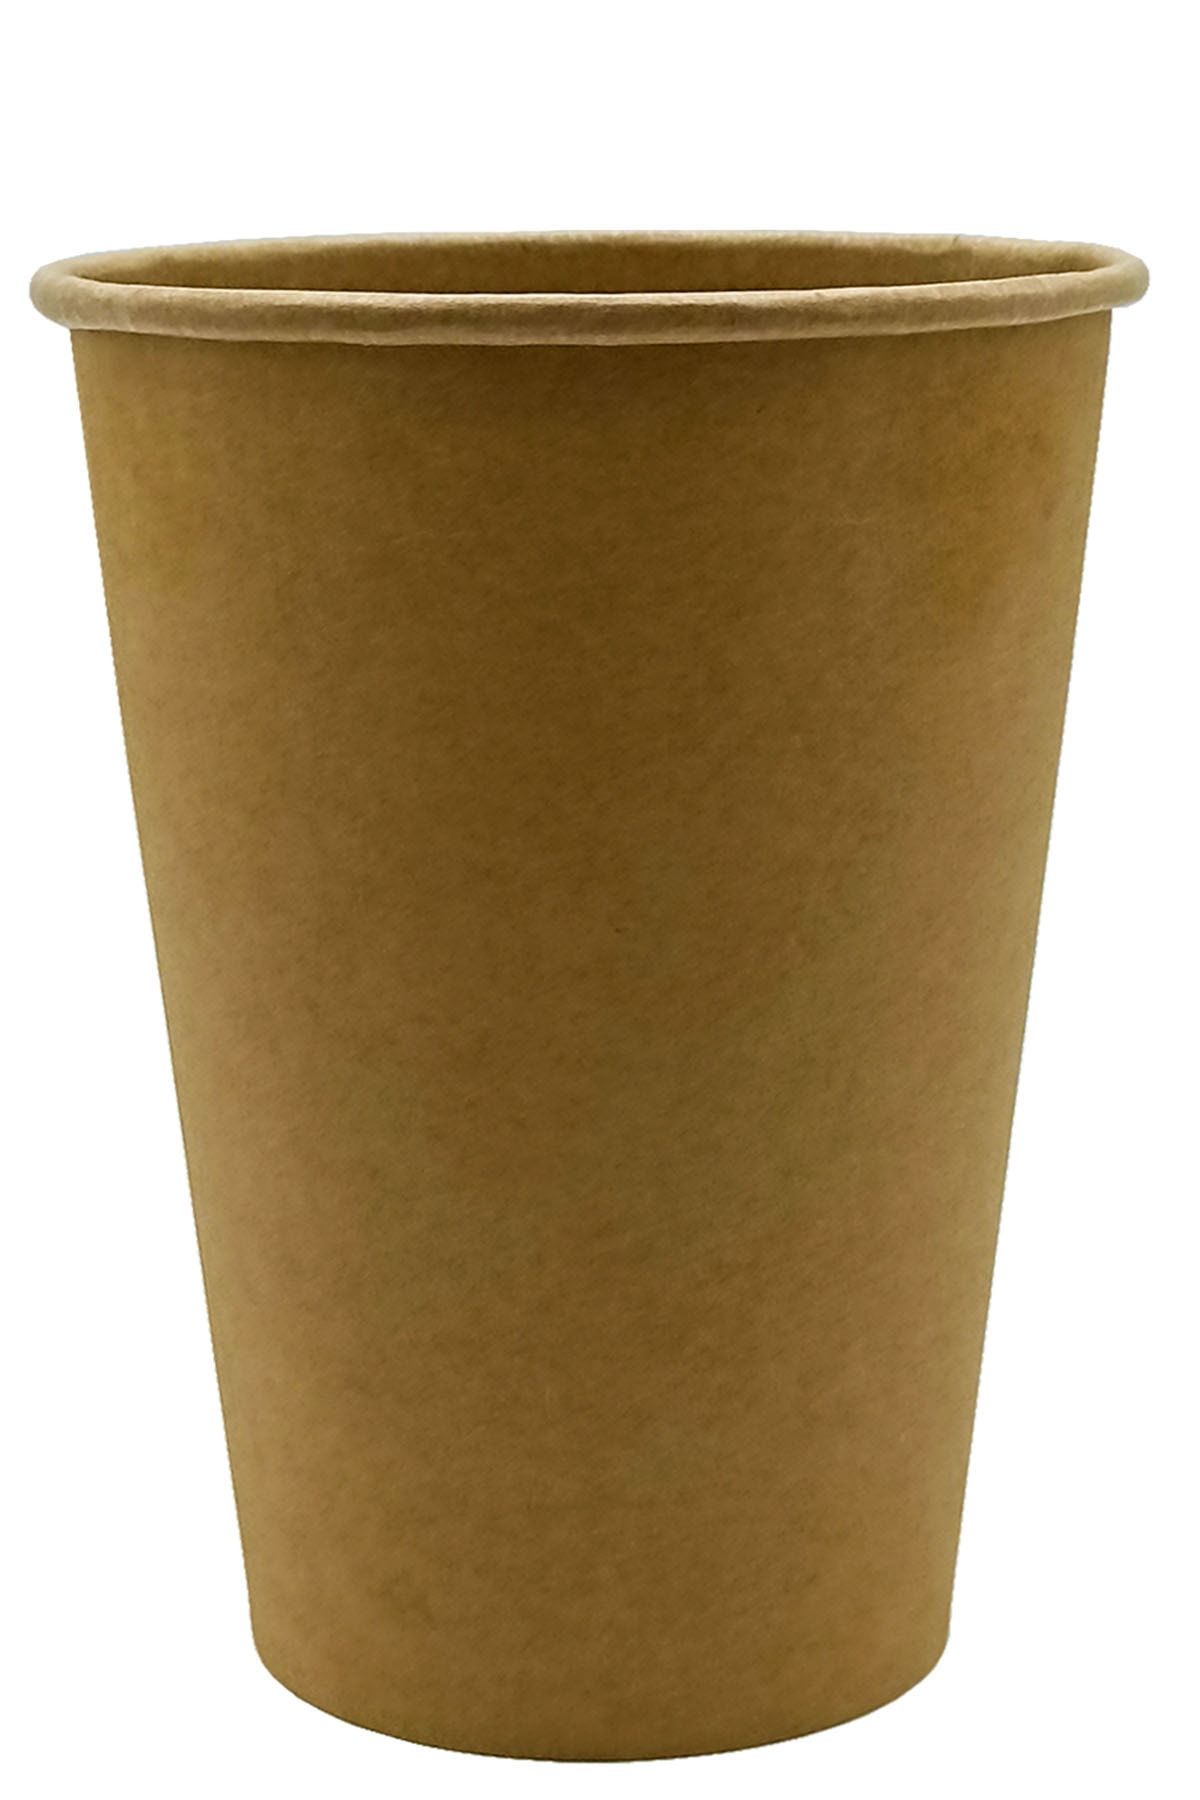 Afra Tedarik 14 Oz Karton Bardak Latte Cappuccino Kraft Kağıt Bardak 380 ml - 150'li